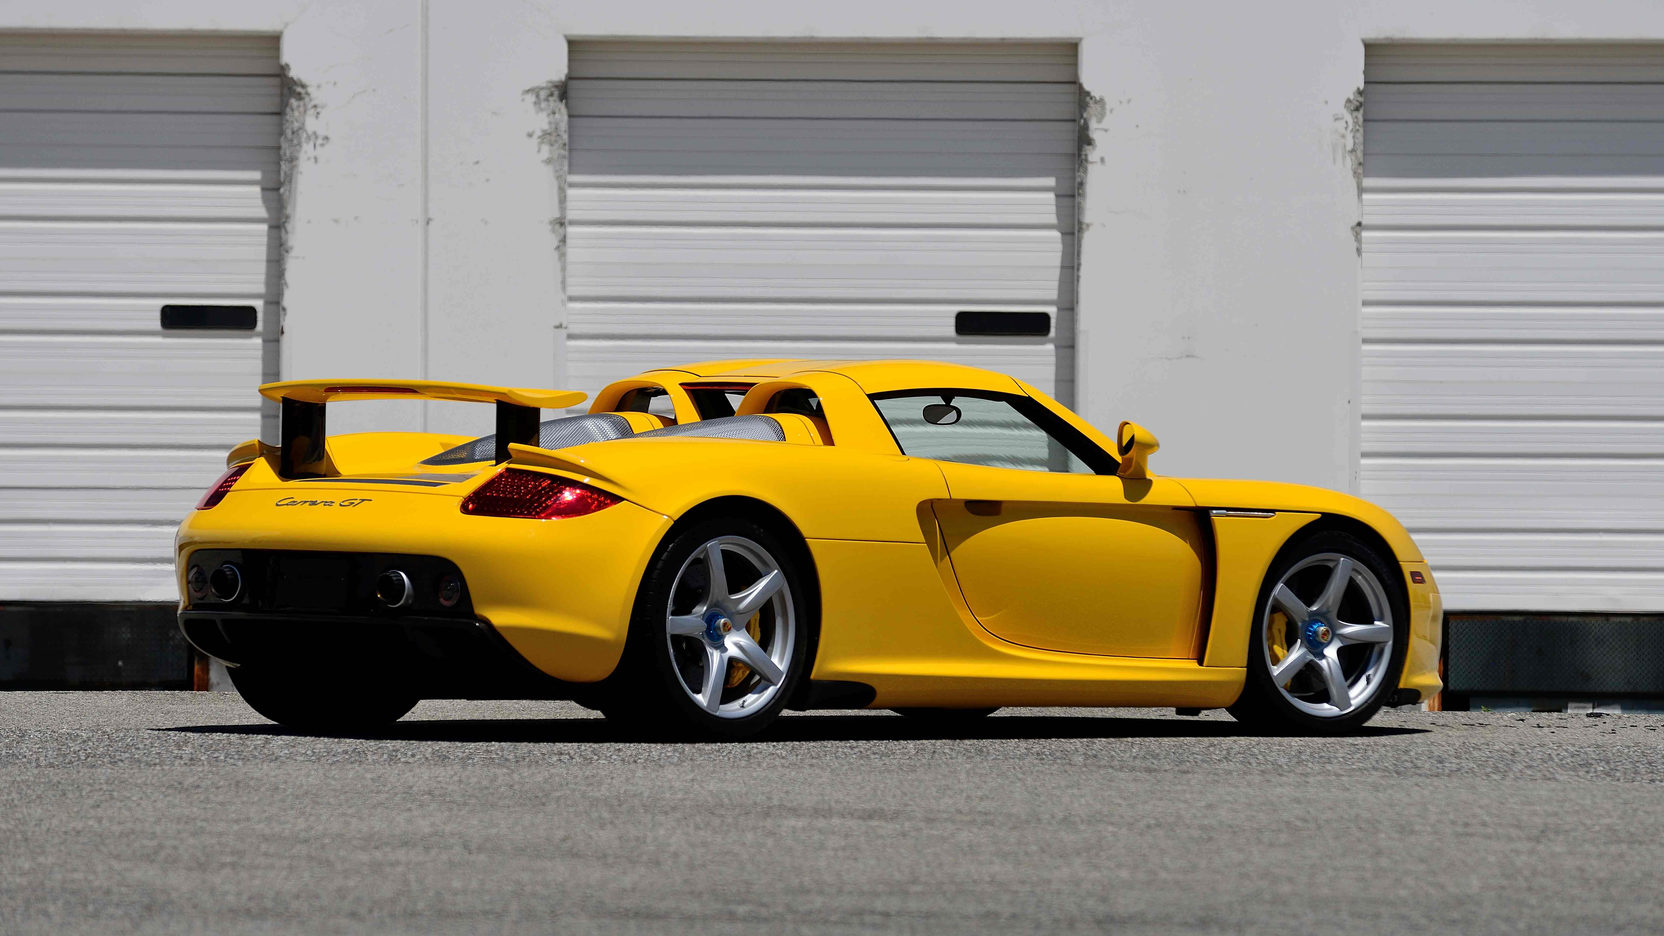 Porsche Carrera GT en amarillo
Fotografía de Mecum Auctions